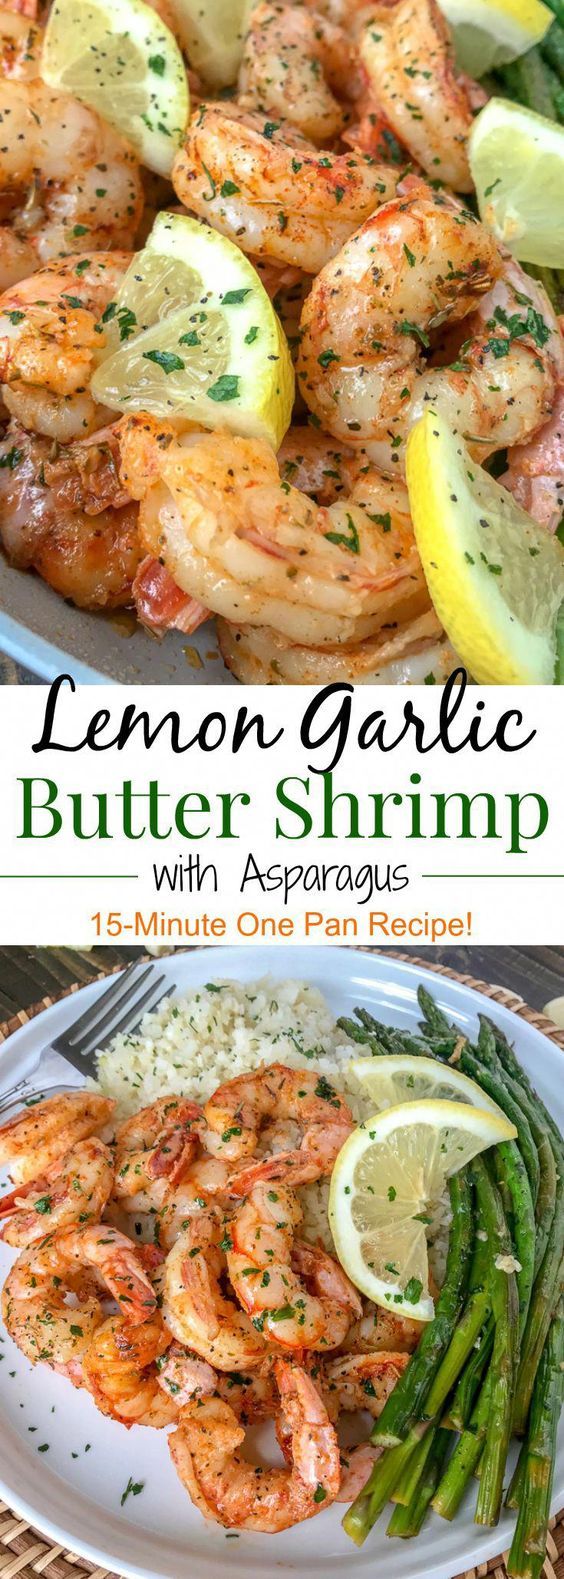 LEMON GARLIC BUTTER SHRIMP WITH ASPARAGUS #garlic #lemon #butter #shrimp #shrimprecipes #asparagus #dinnerideas #dinnerrecipes #easydinnerrecipes 